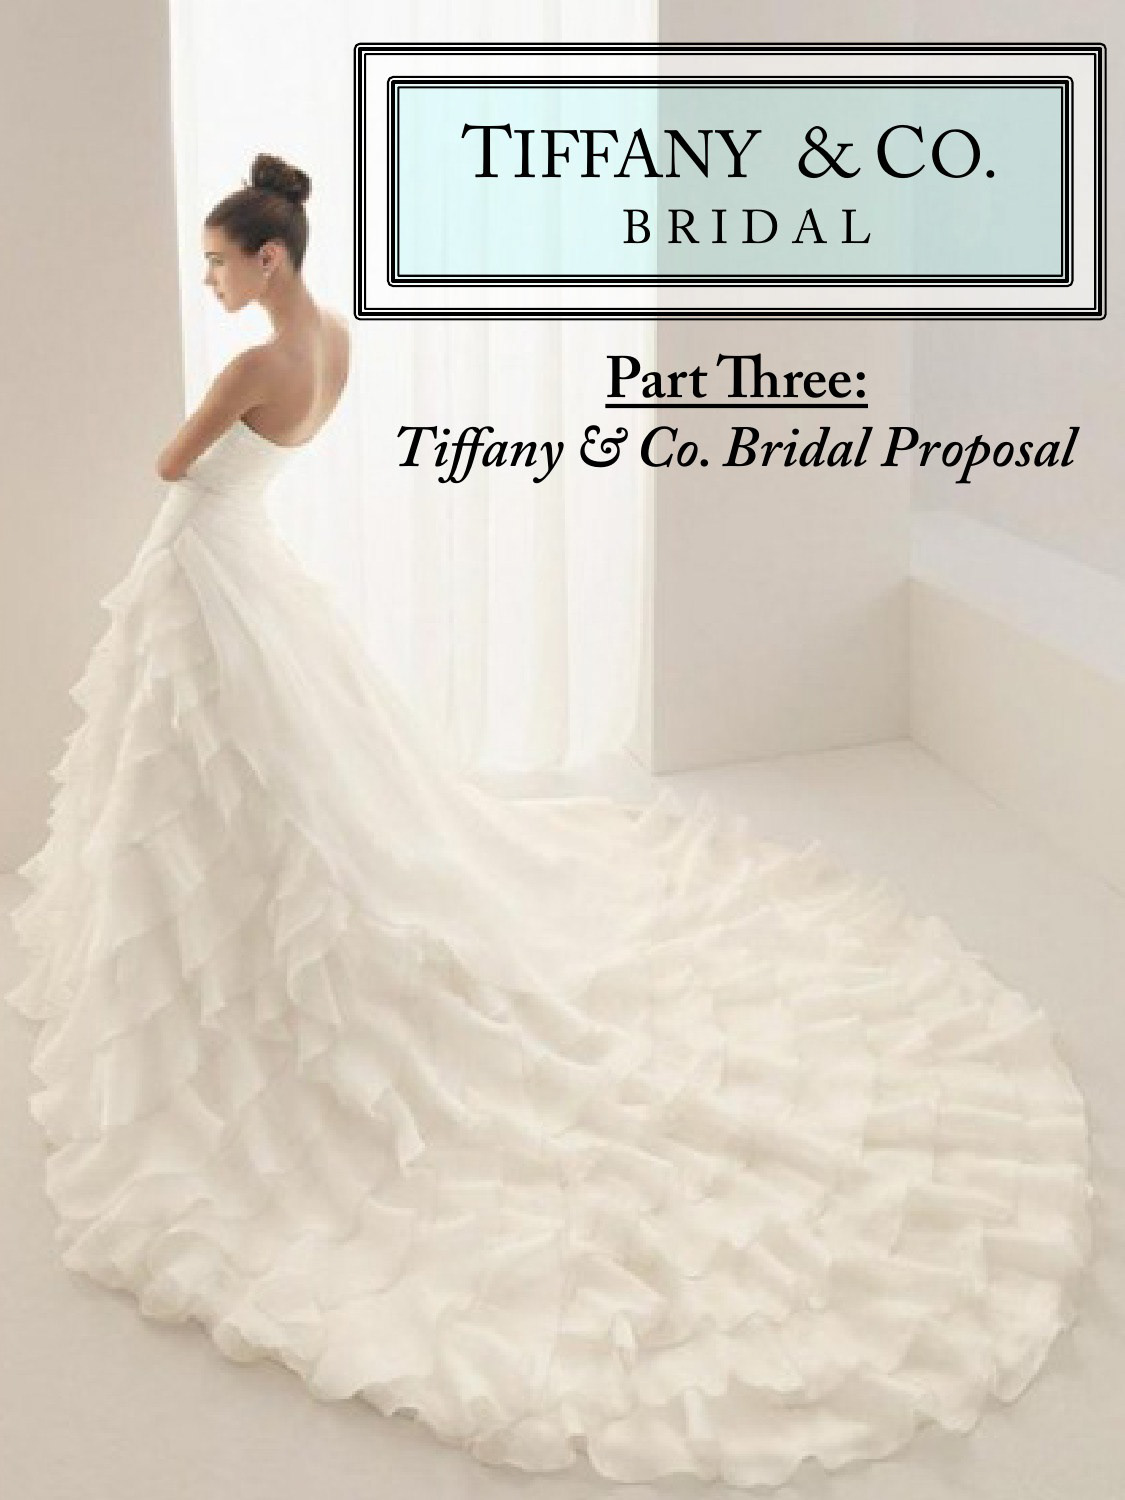 danamarieburmeister luxury newbranddevelopment Tiffany&Co bridal